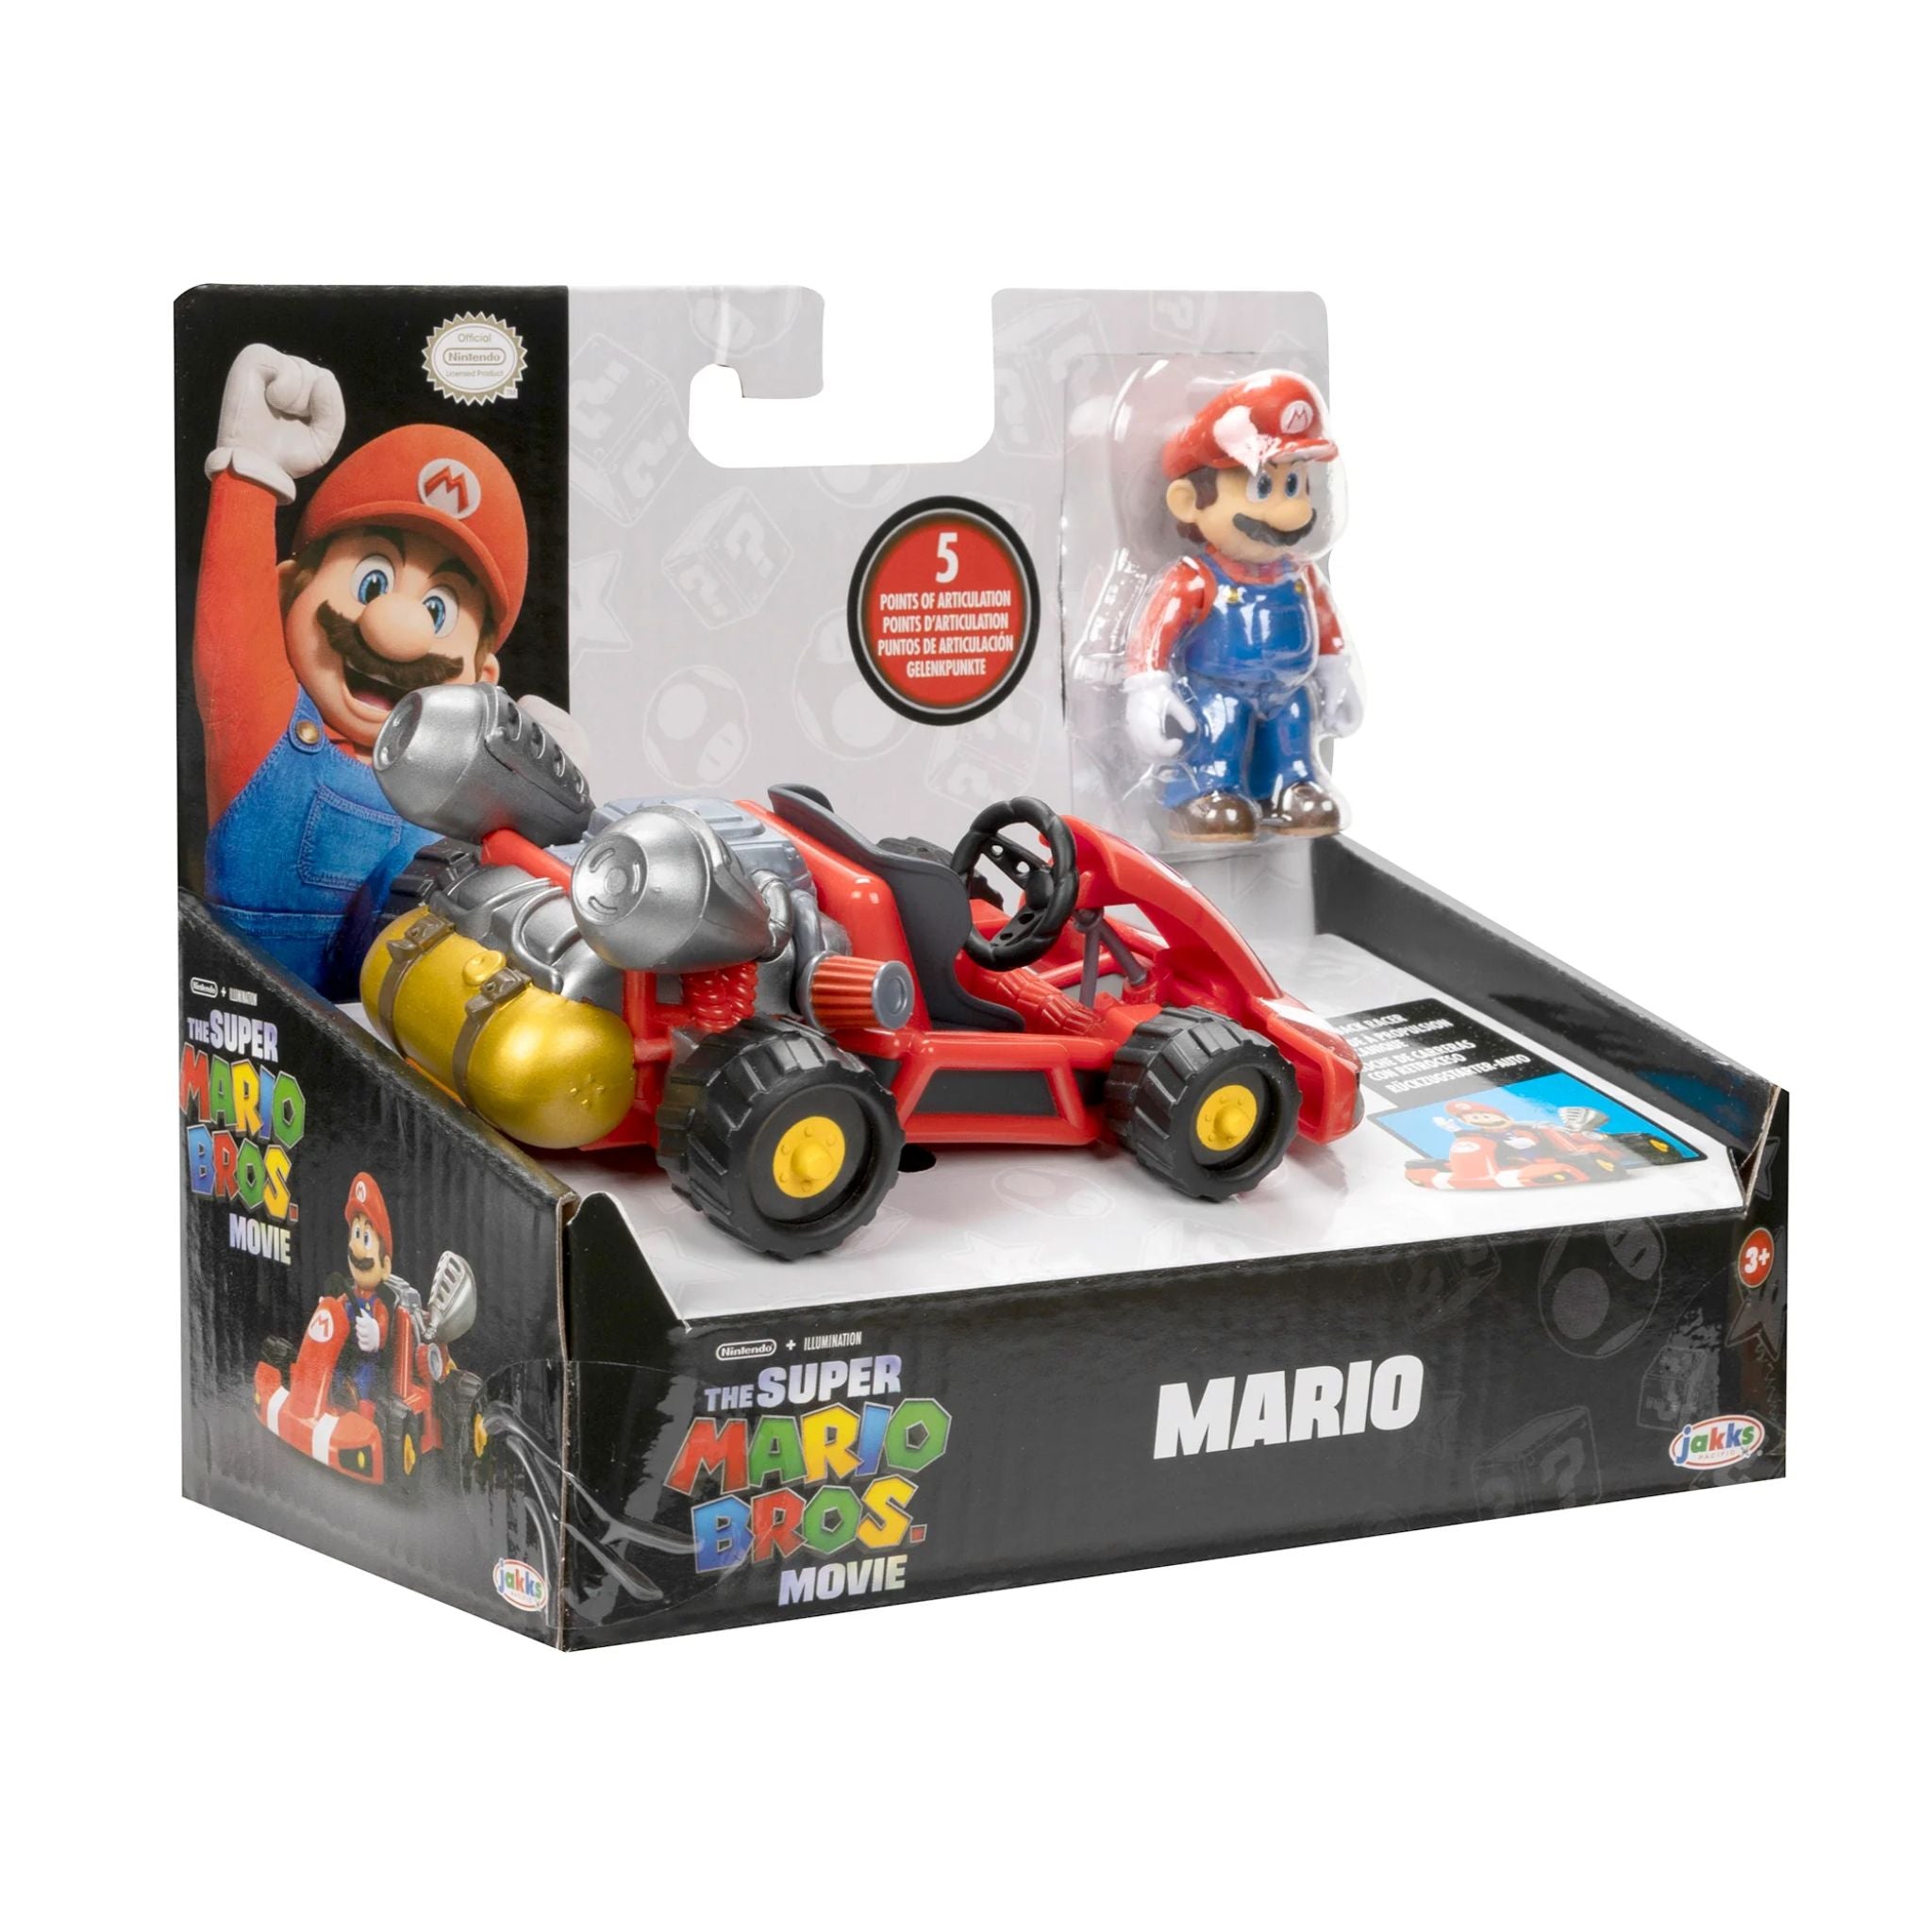 Super Mario Bros. Movie 2.5" Figure with Pull Back Racer - Mario (US-417214-M)